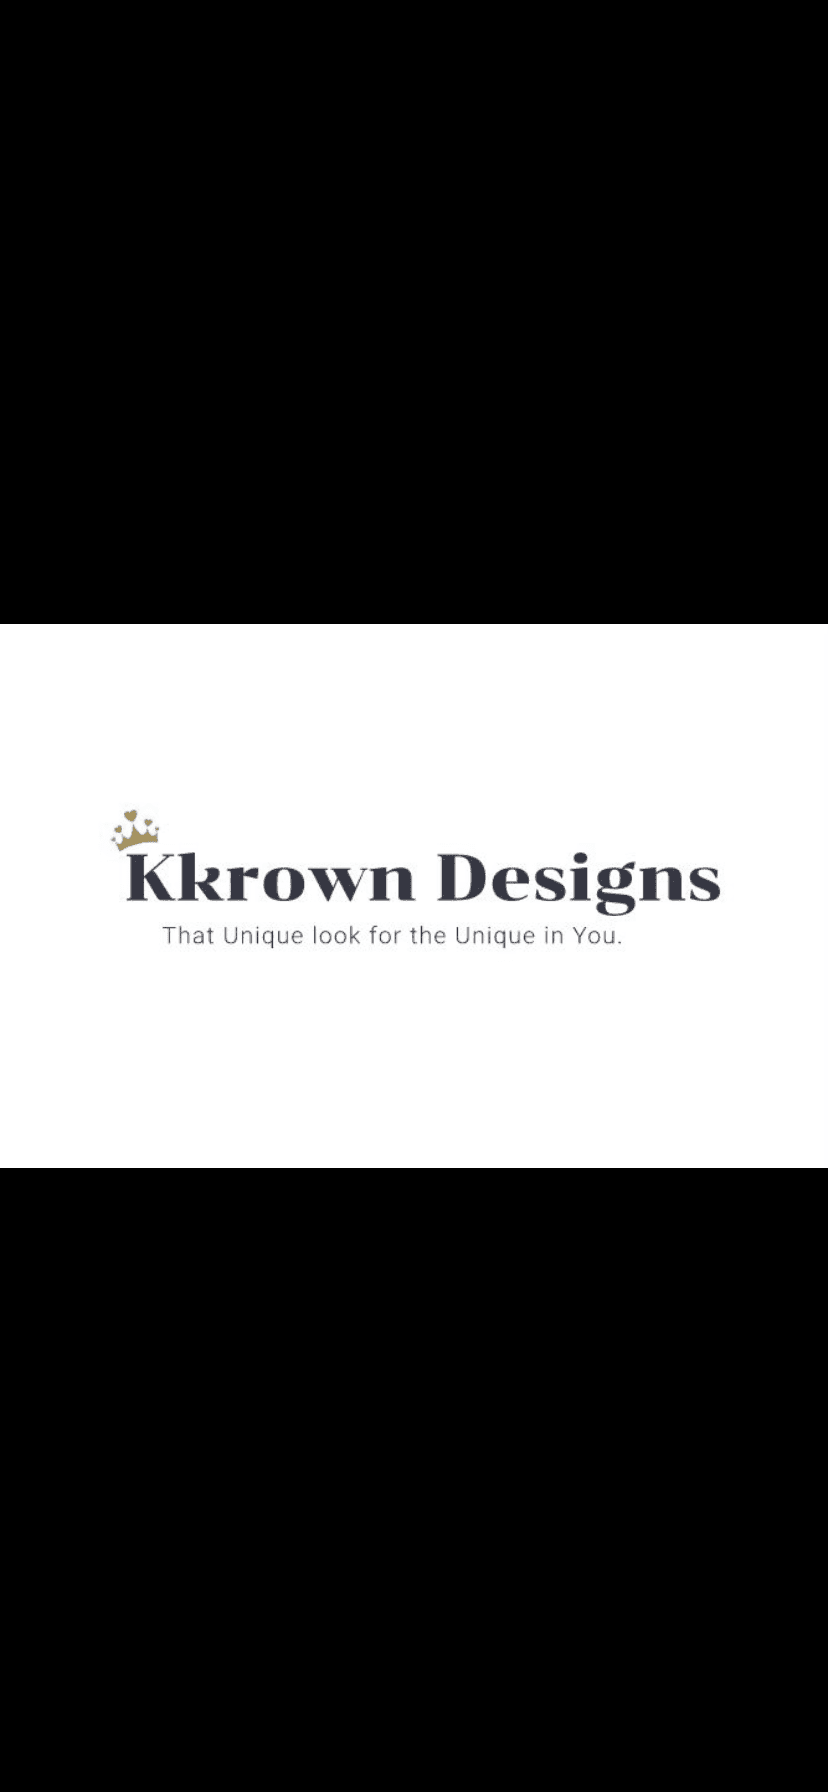 Kkrown Designs